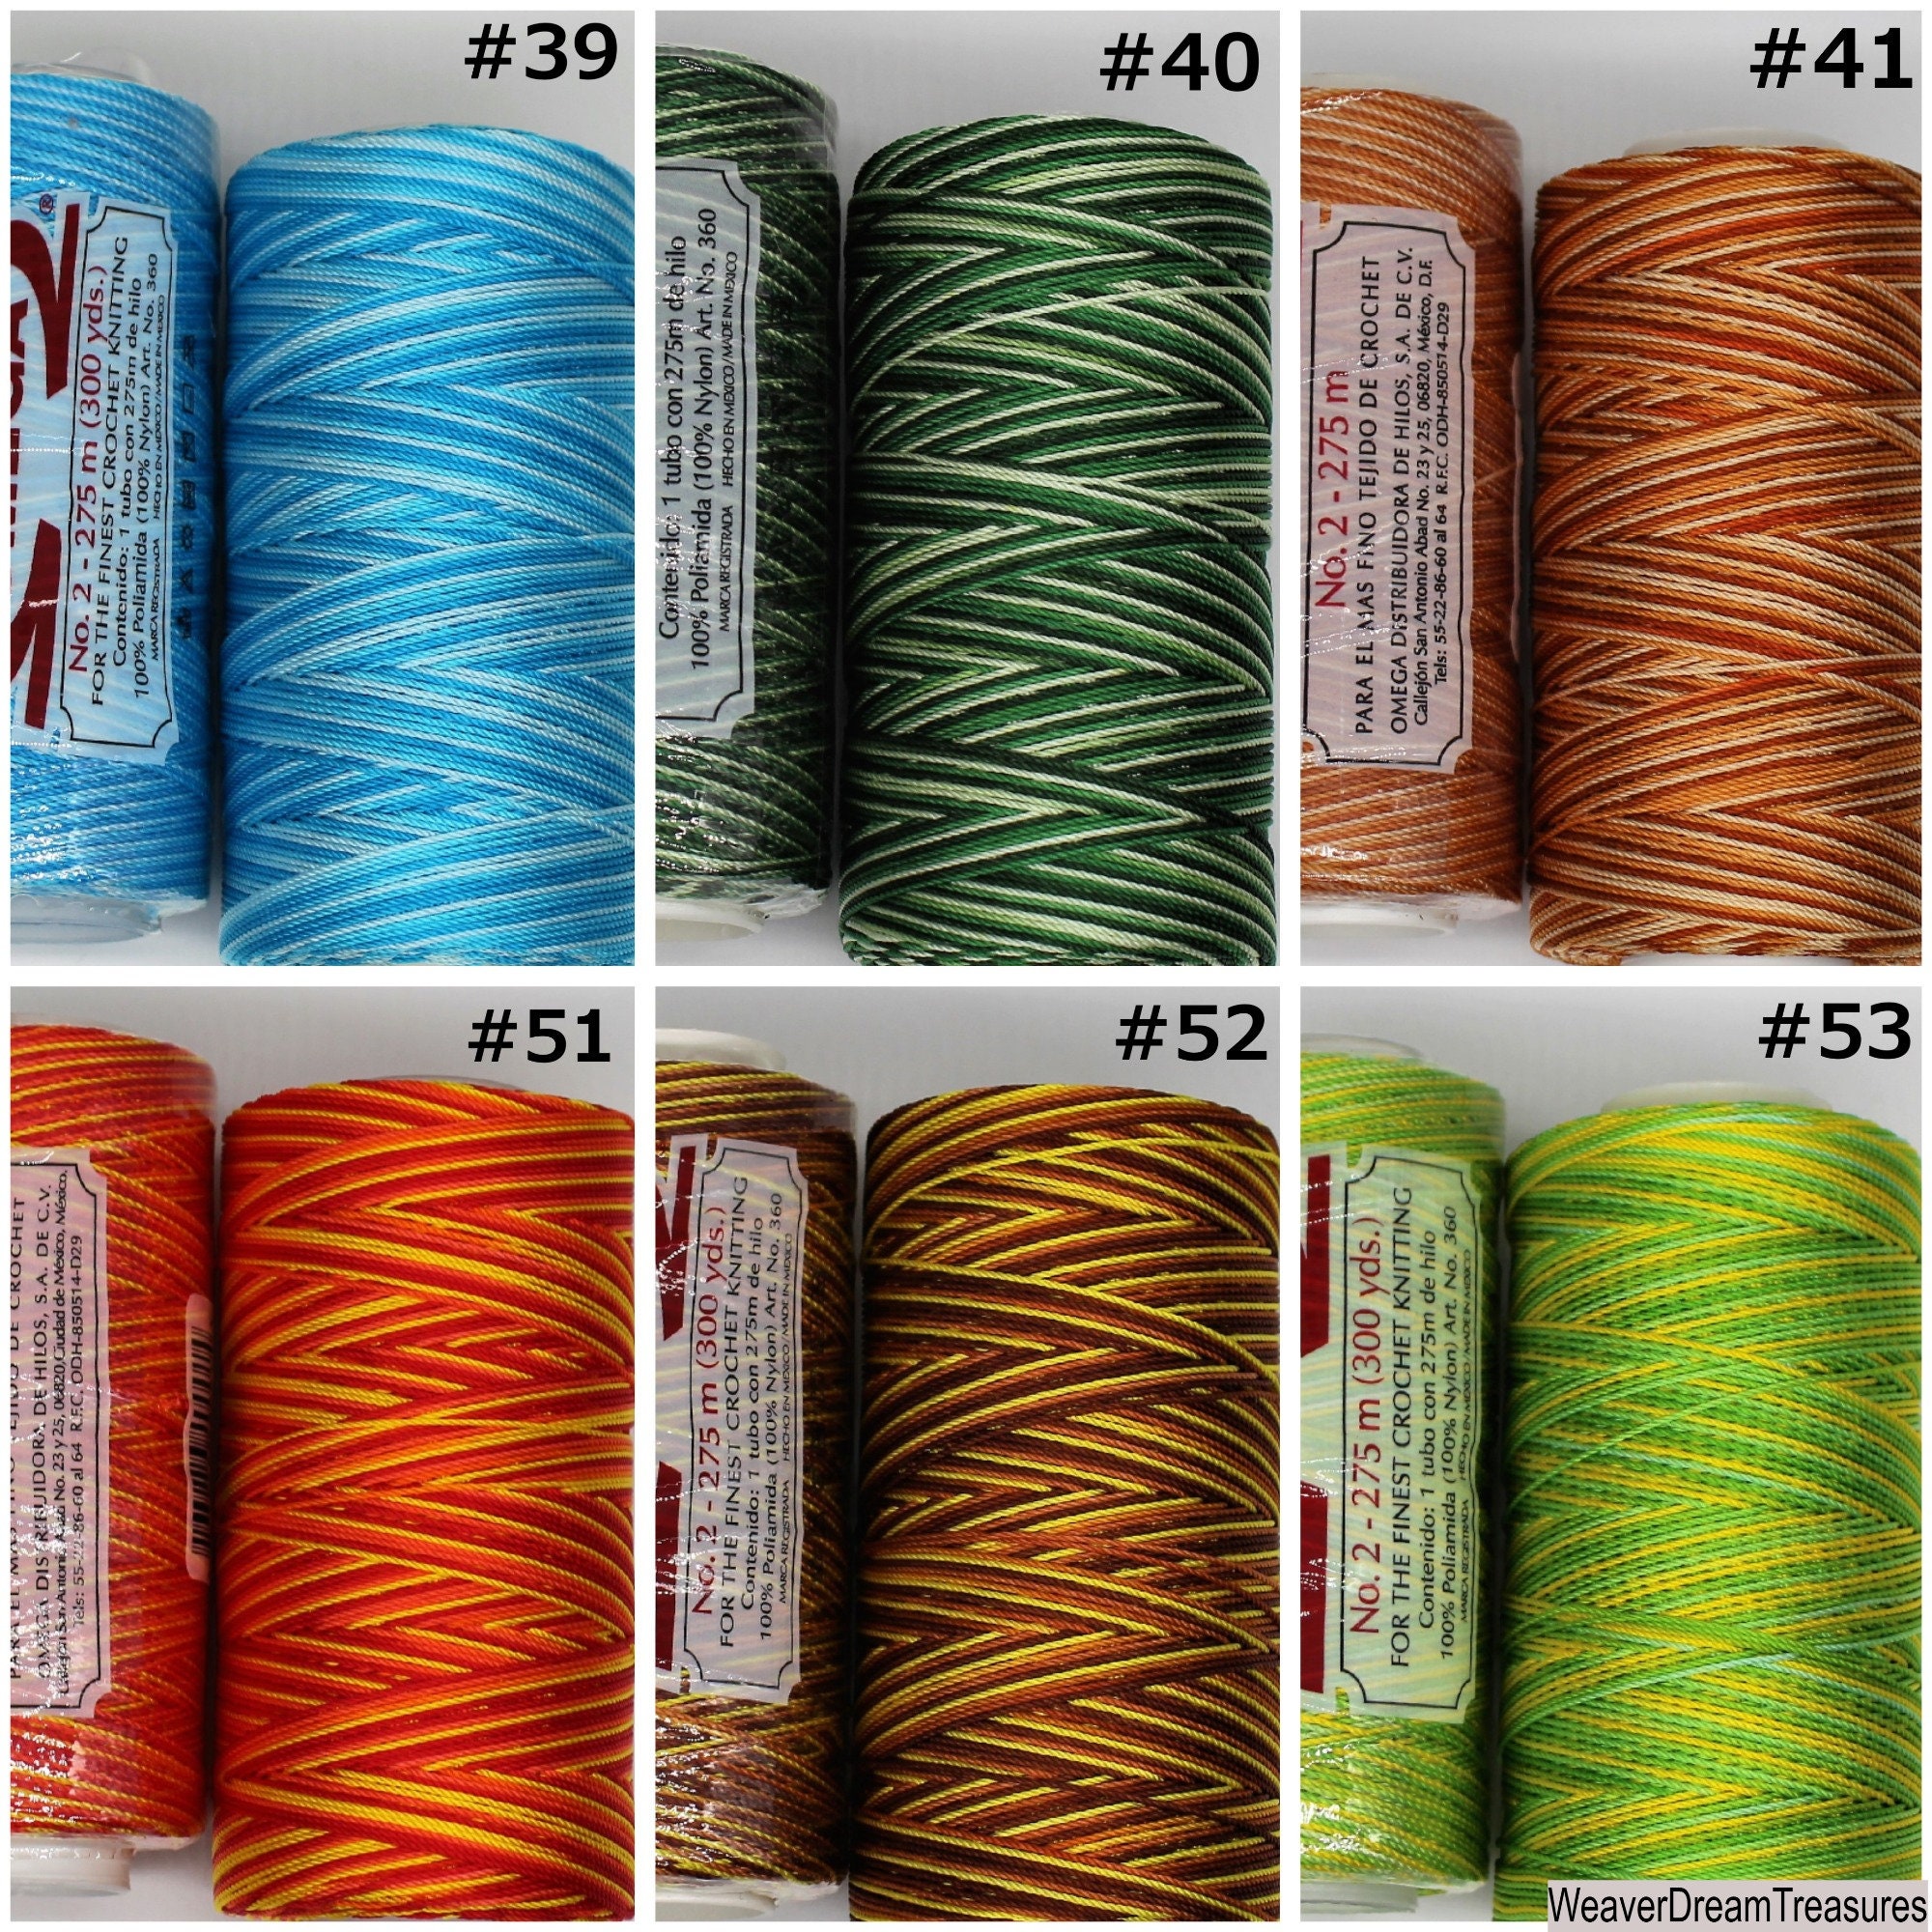 Nylon No. 2 OMEGA Variegated / 100% Nylon String Cord. / Crochet